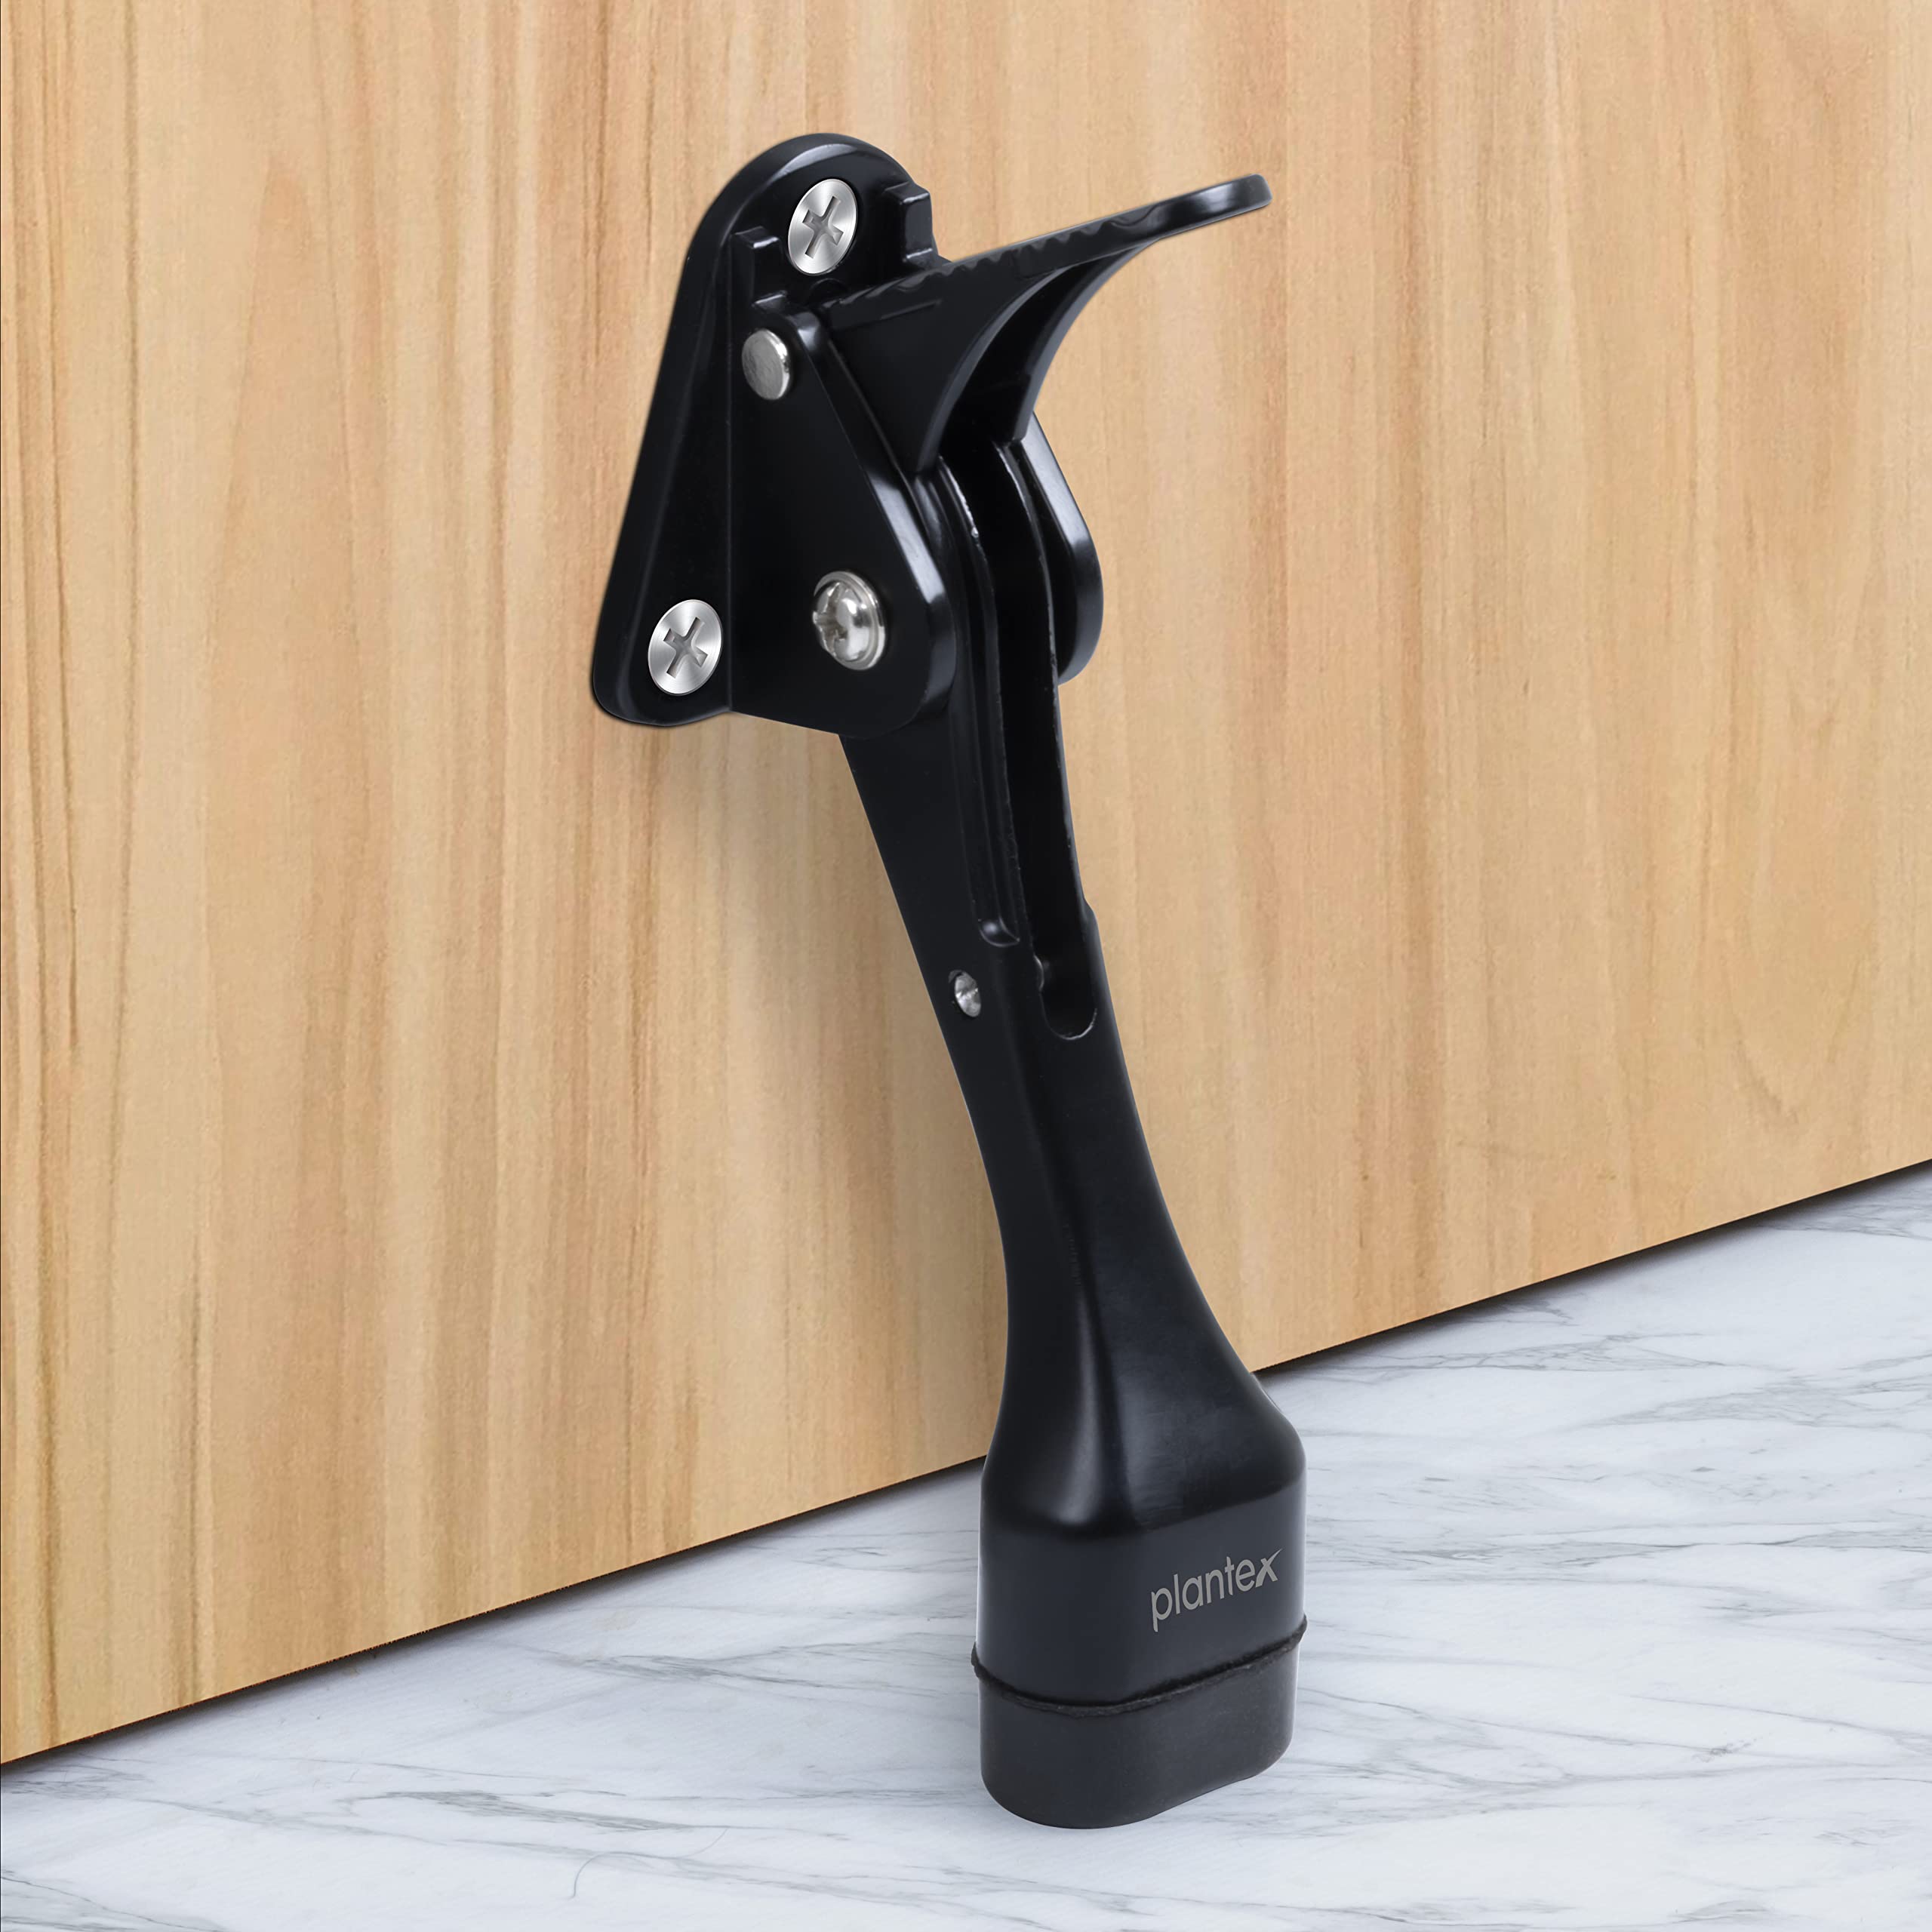 Plantex Premium Door Stopper, Kickdown Stop with one Touch Adjestable Height & Rubbar Tip, Door Stopes – Pack of 1 (186 - Black)